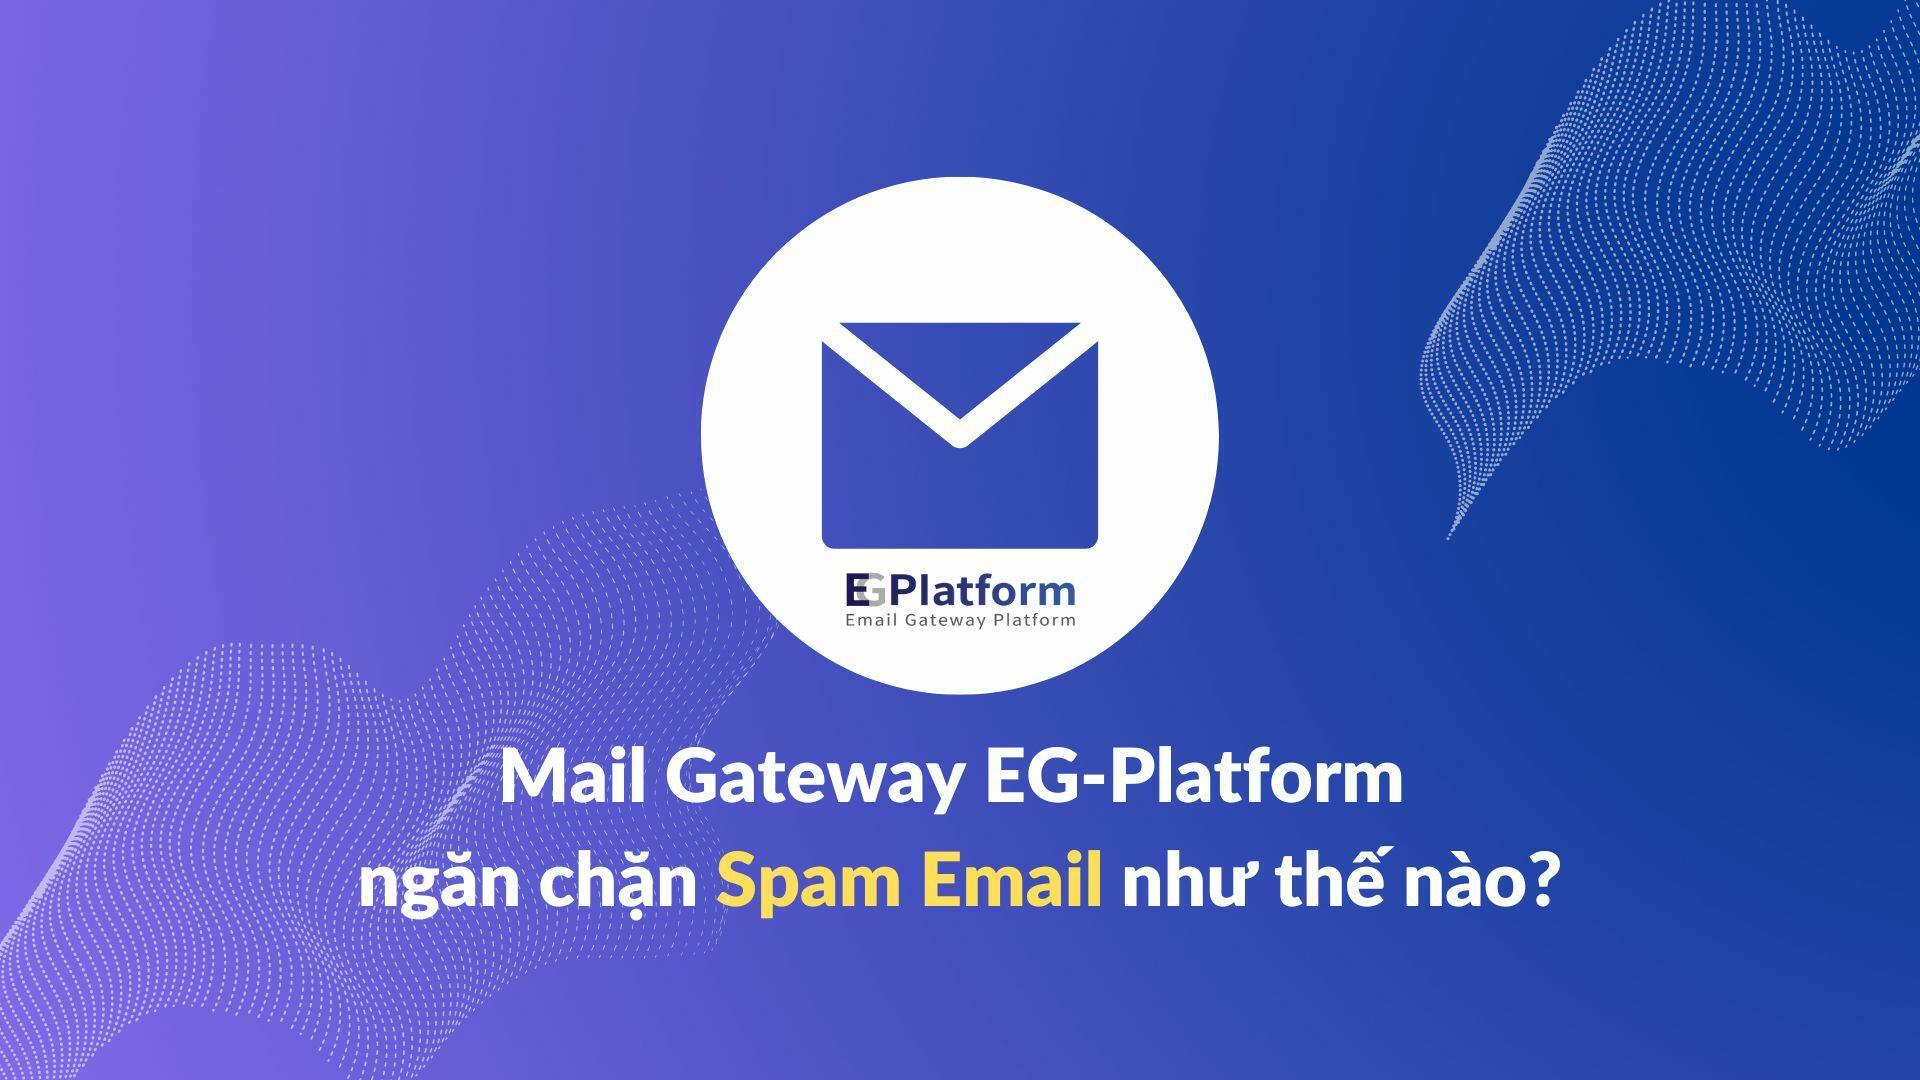 How does Mail Gateway EG-Platform prevent spam email?